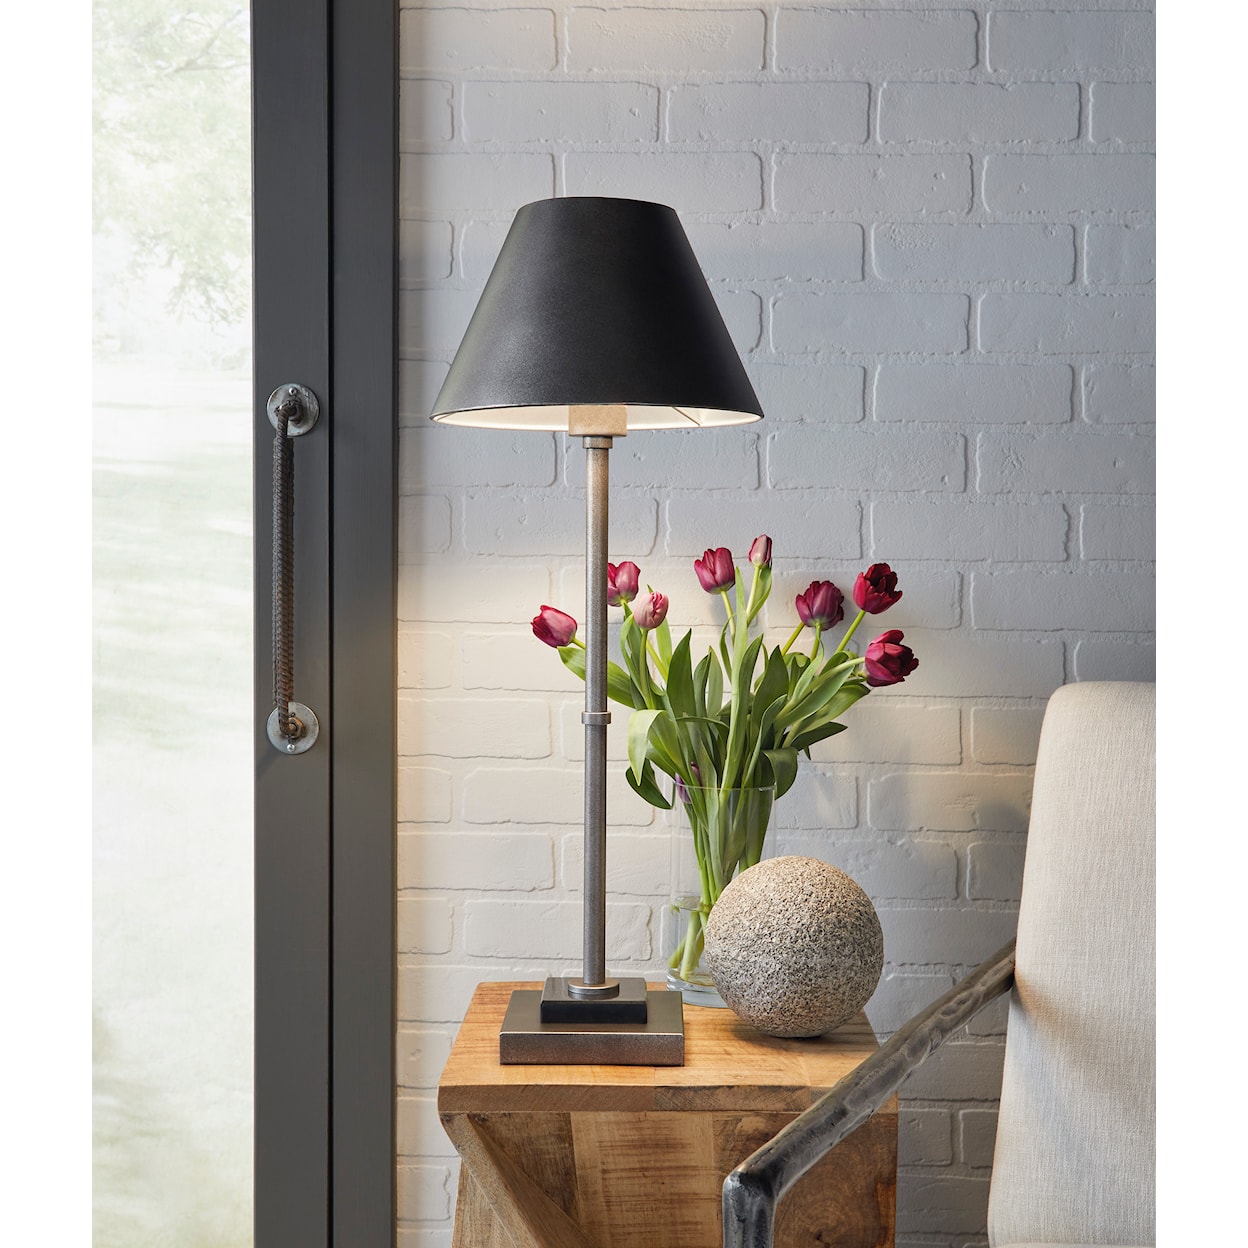 Ashley Furniture Signature Design Lamps - Traditional Classics Belldunn Table Lamp